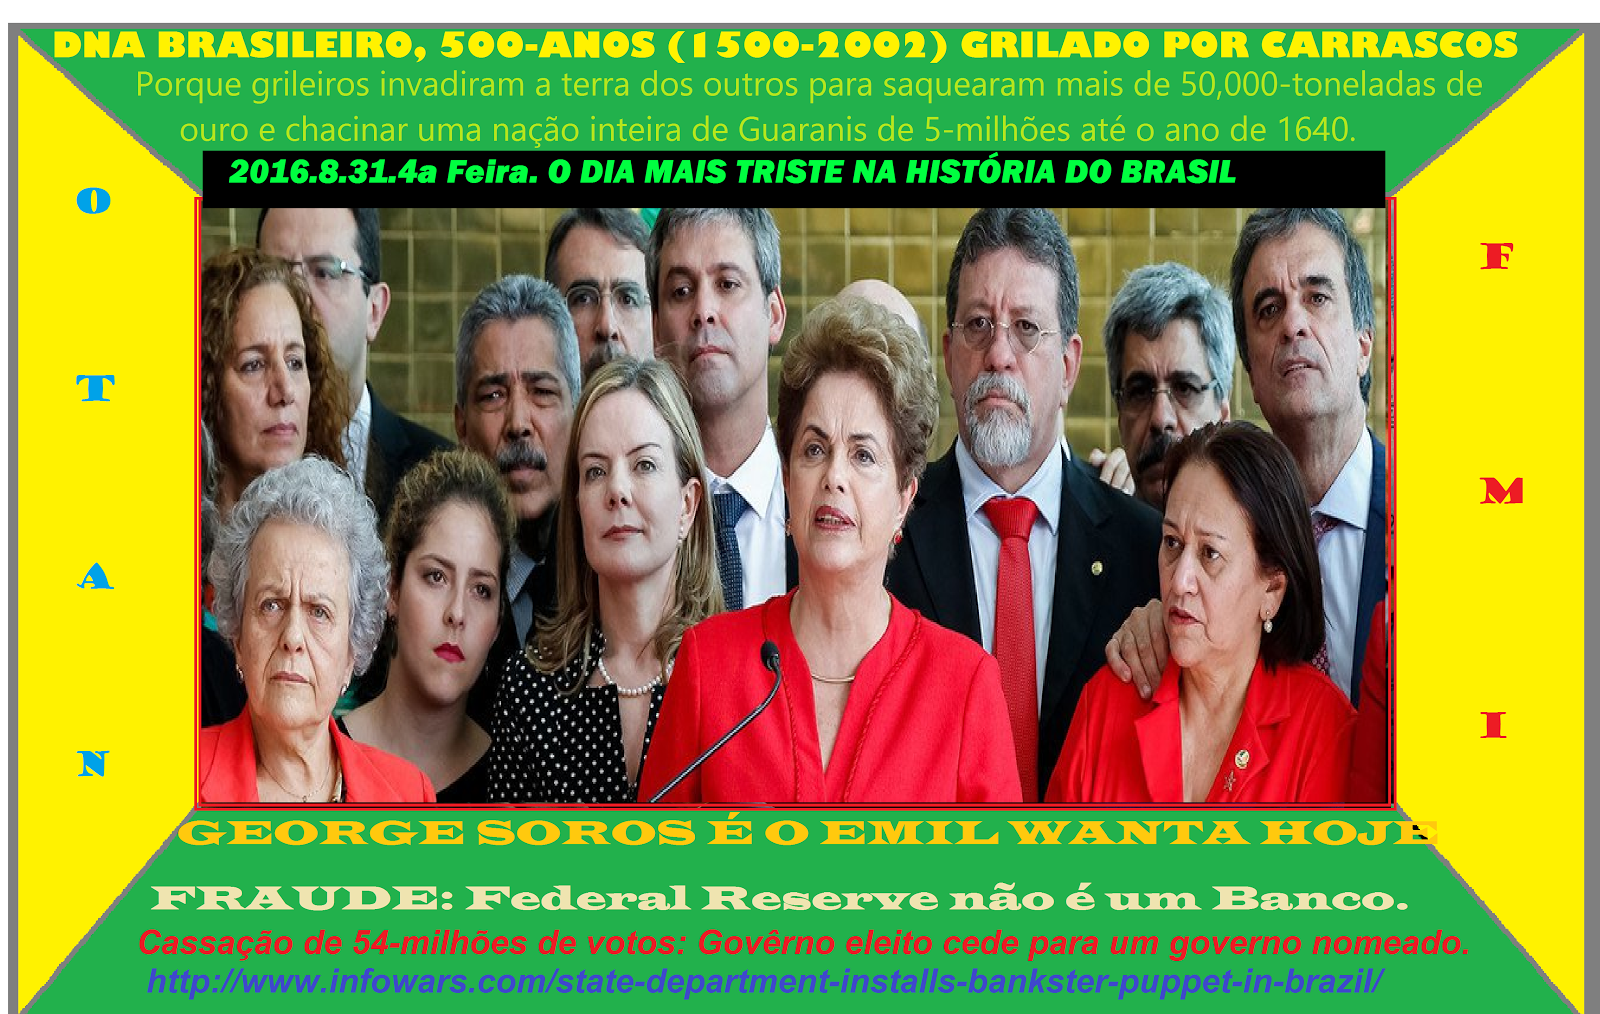 O DIA MAIS TRISTE NA HISTÓRIA DO BRASIL//THE SADDEST DAY IN BRAZILIAN HISTORY. WHAT A SHAME.